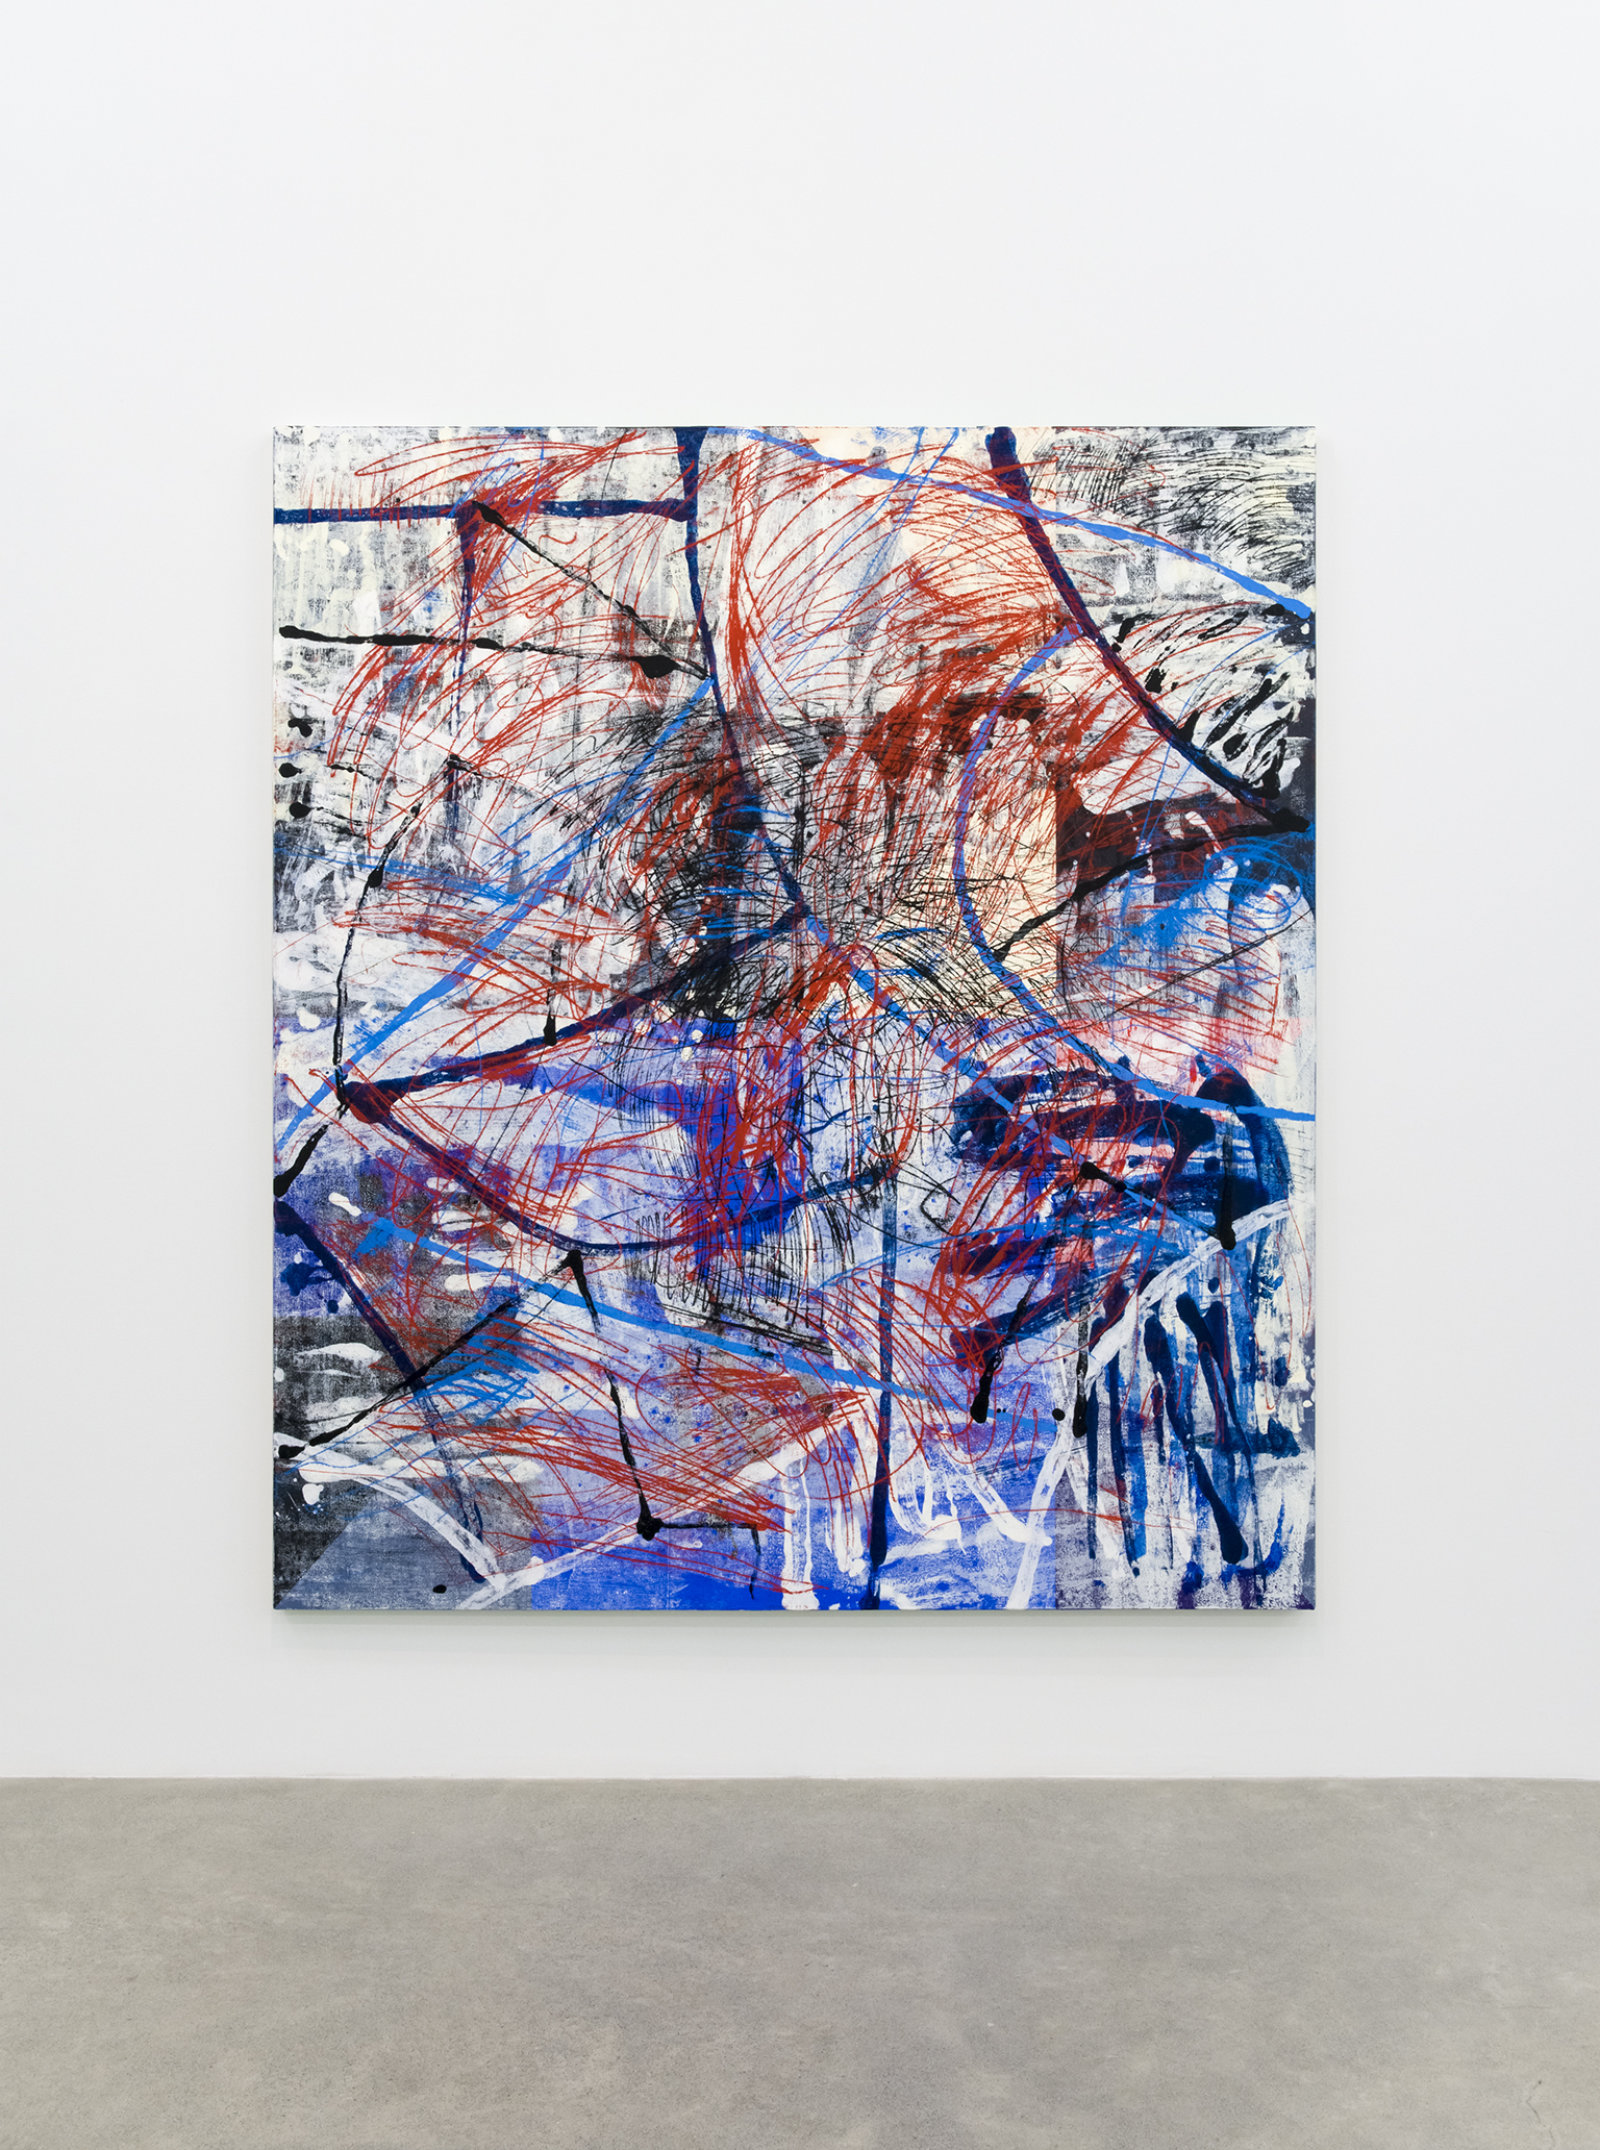 Damian Moppett, Untitled “Y”, 2016, oil on canvas, 84 x 74 in. (213 x 188 cm)